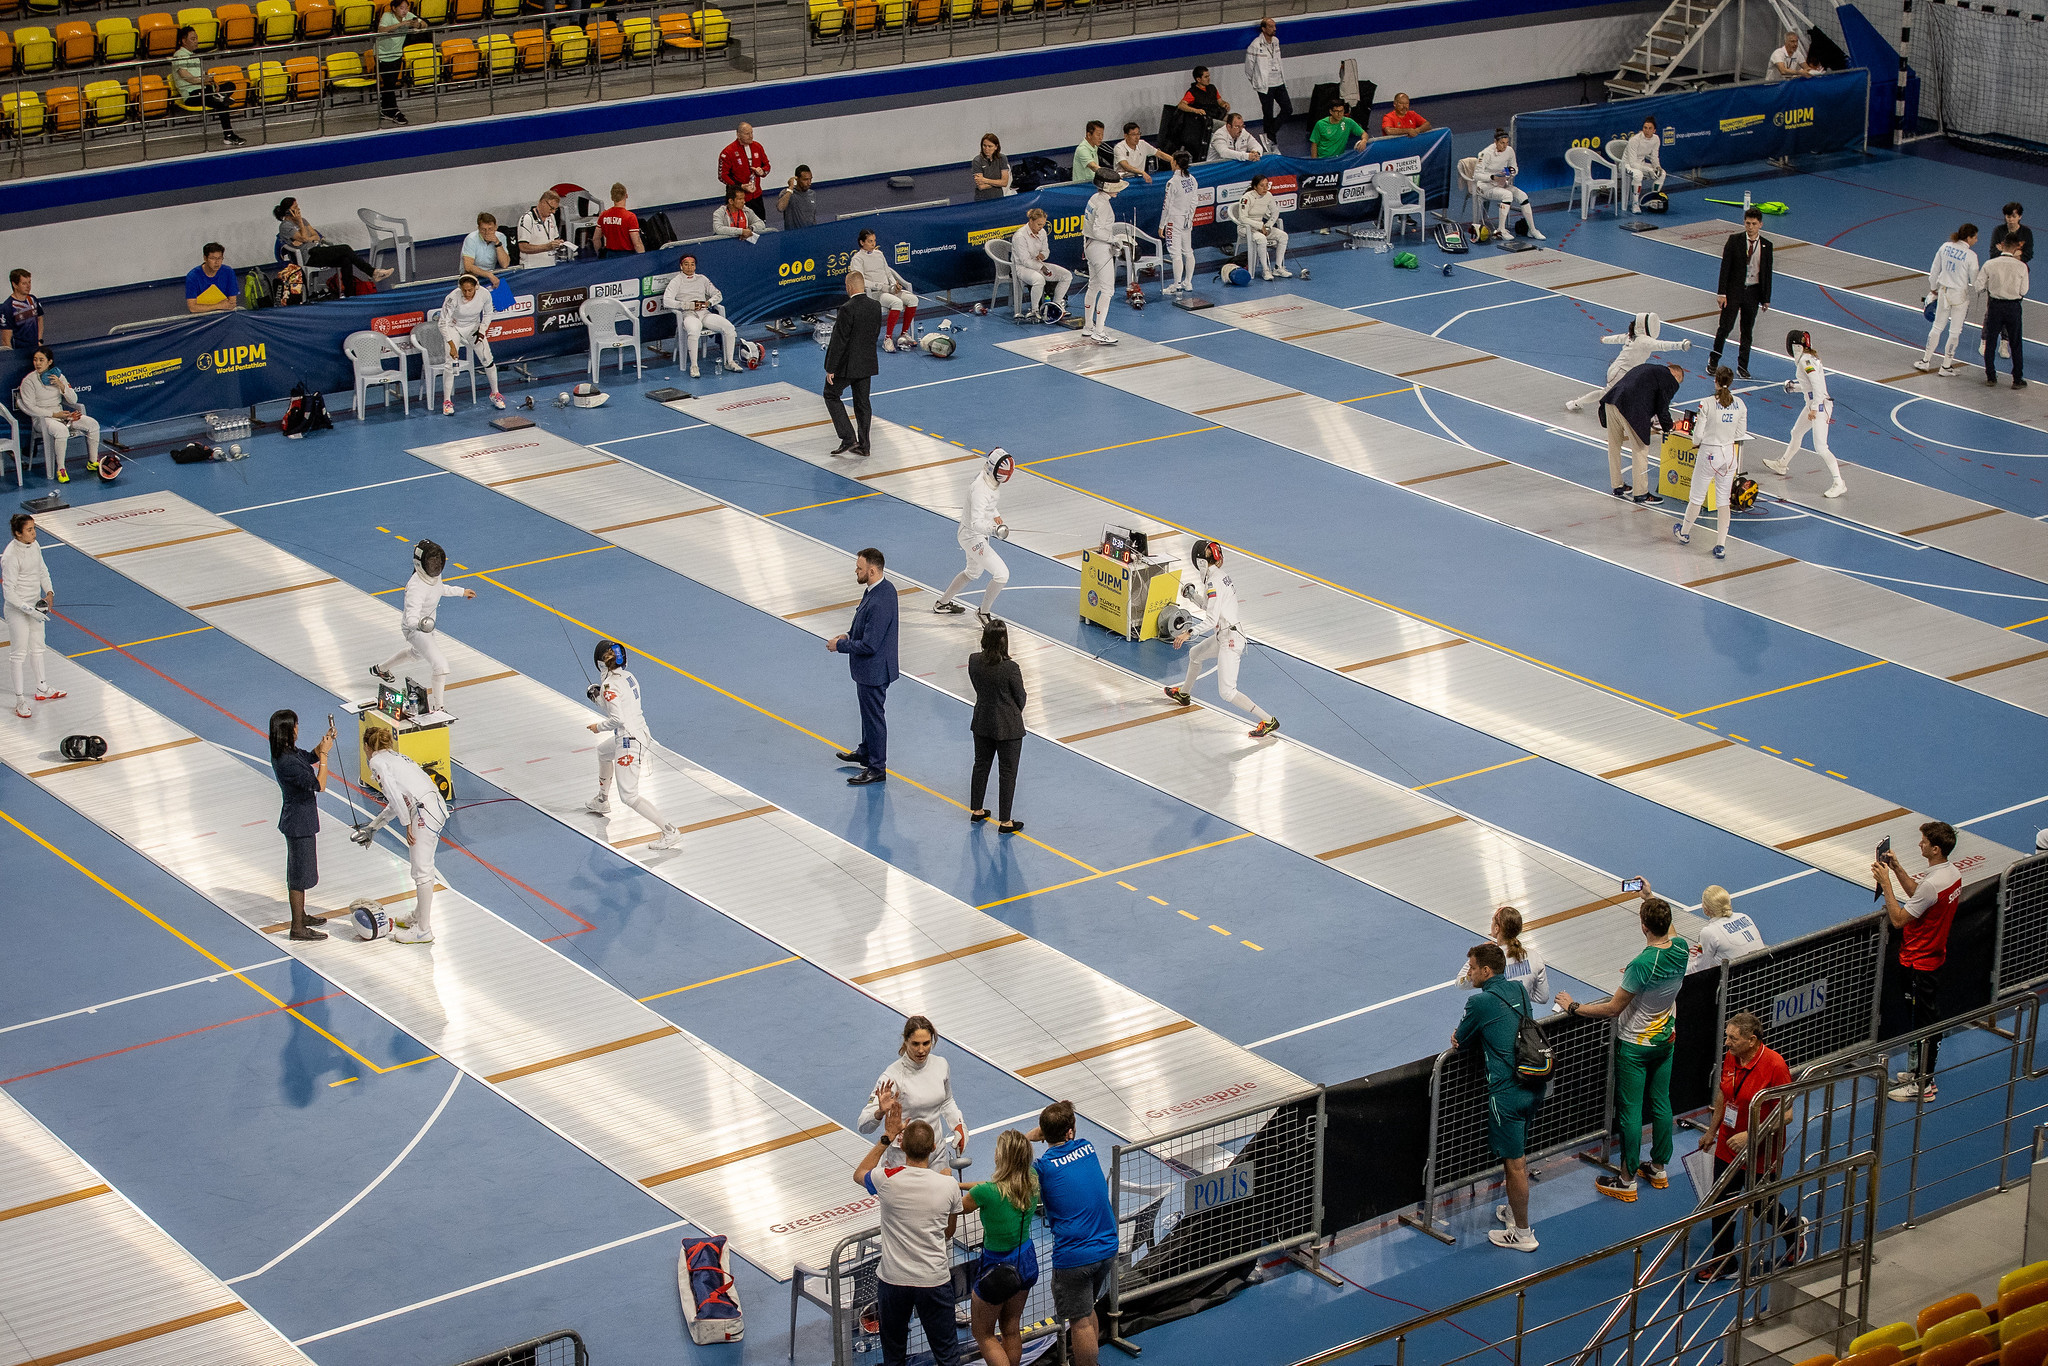 Modern pentathlon's ranking round in fencing features 35 contests for each pentathlete ©UIPM/Augustas Didžgalvis